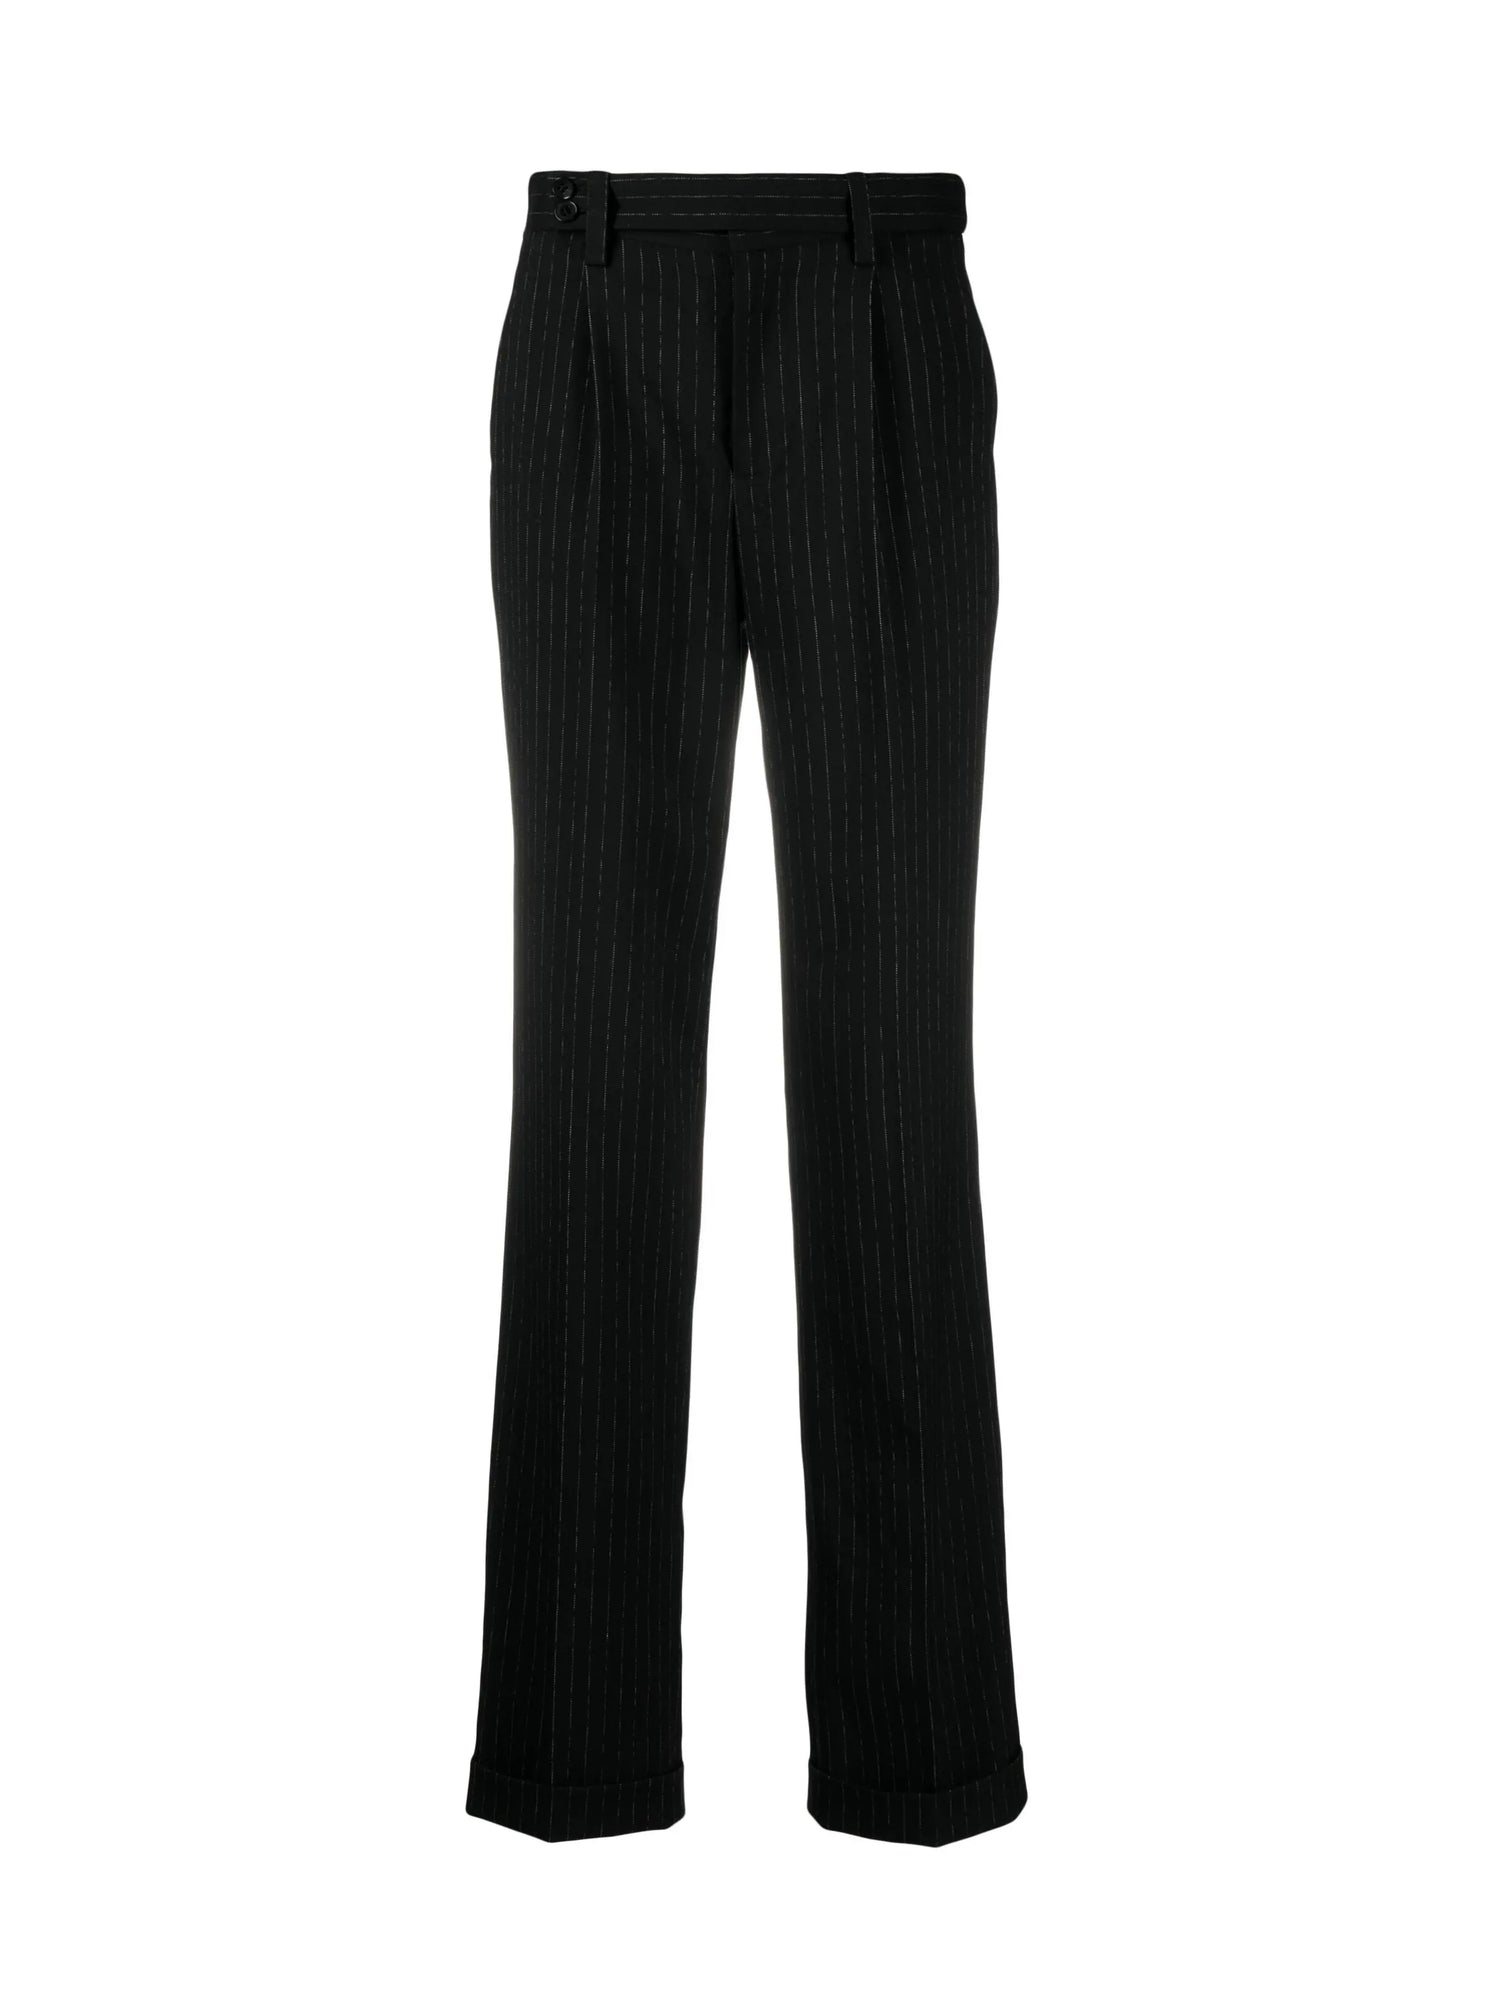 PURA TAILLEUR PINSTRIPE trousers, black